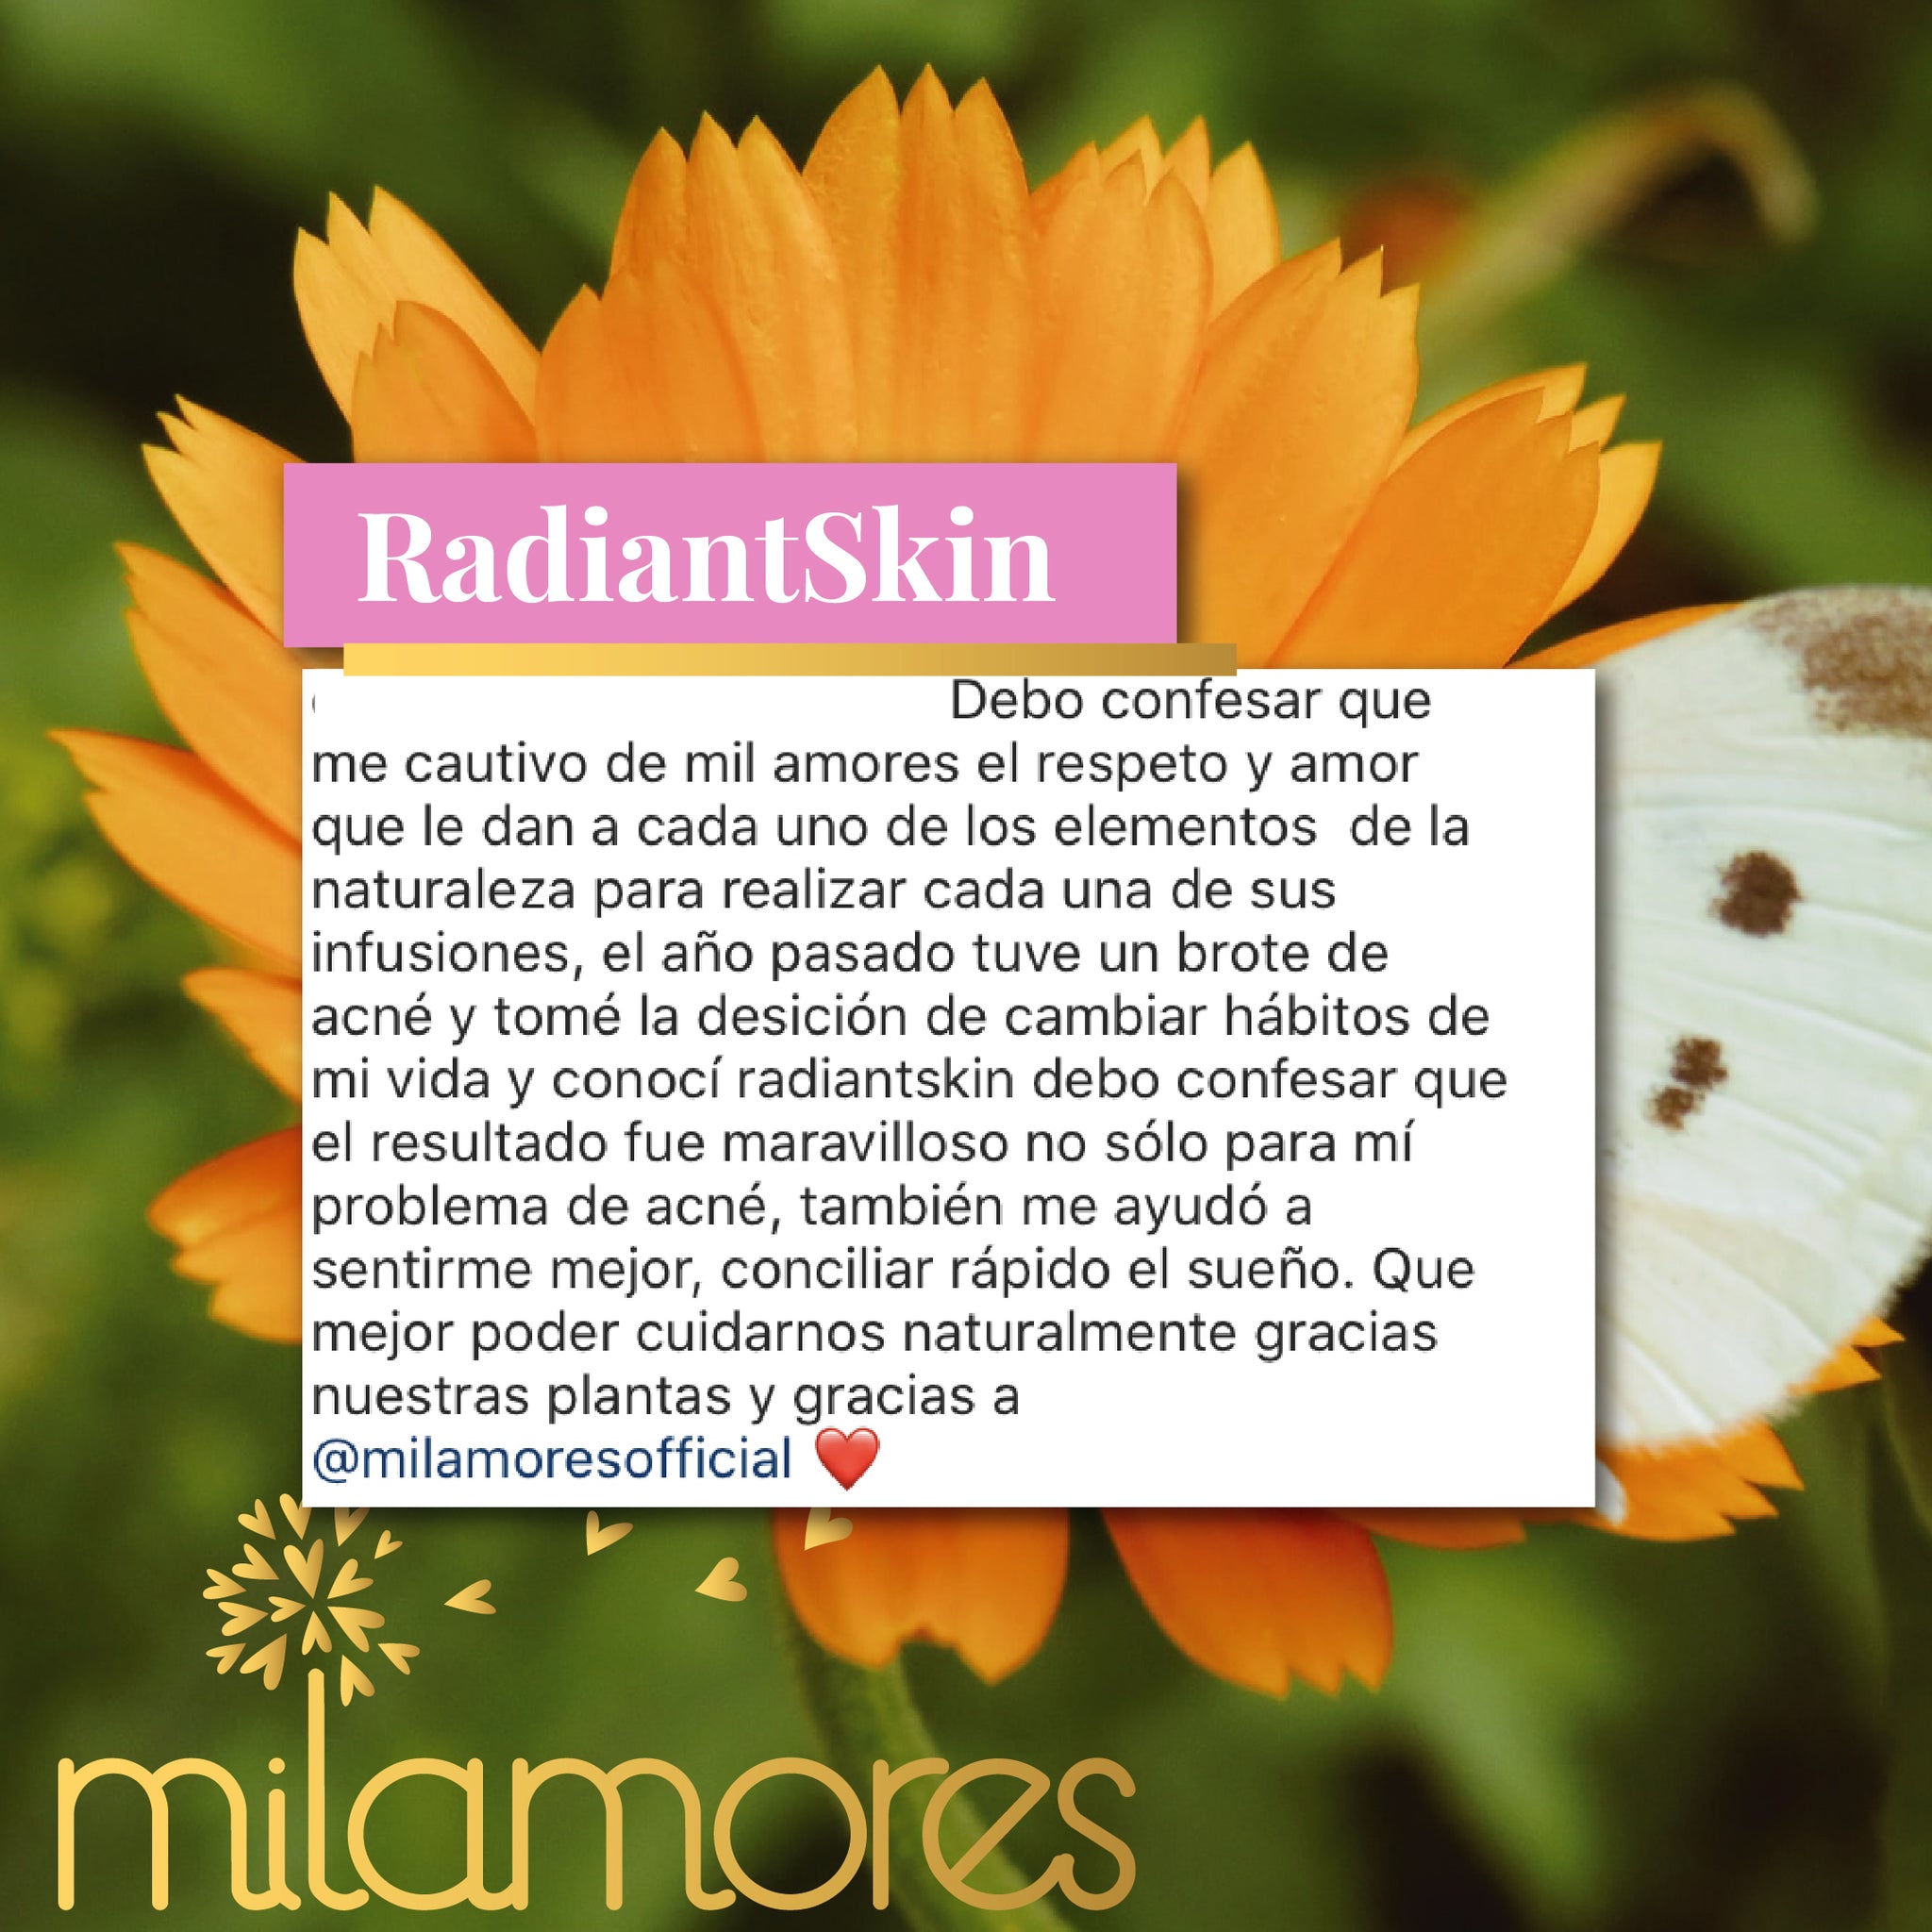 RadiantSkin-Milamores-Colombia-01